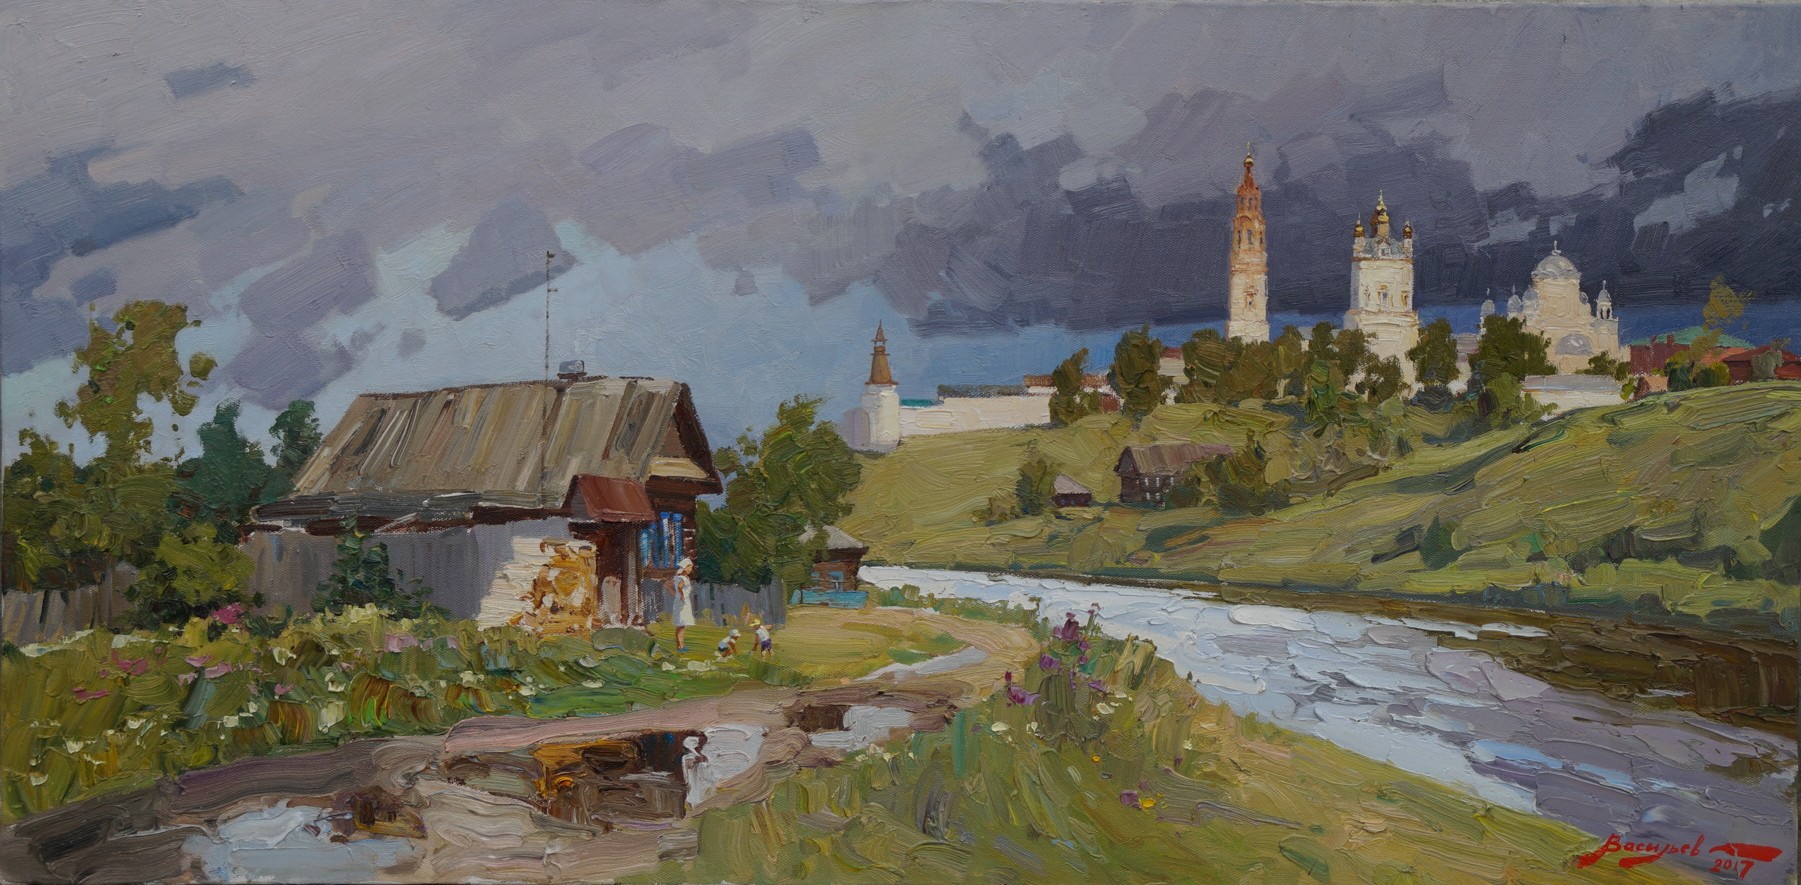 After The Thunderstorm. Verkhoturye - 1, Dmitry Vasiliev, Buy the painting Oil